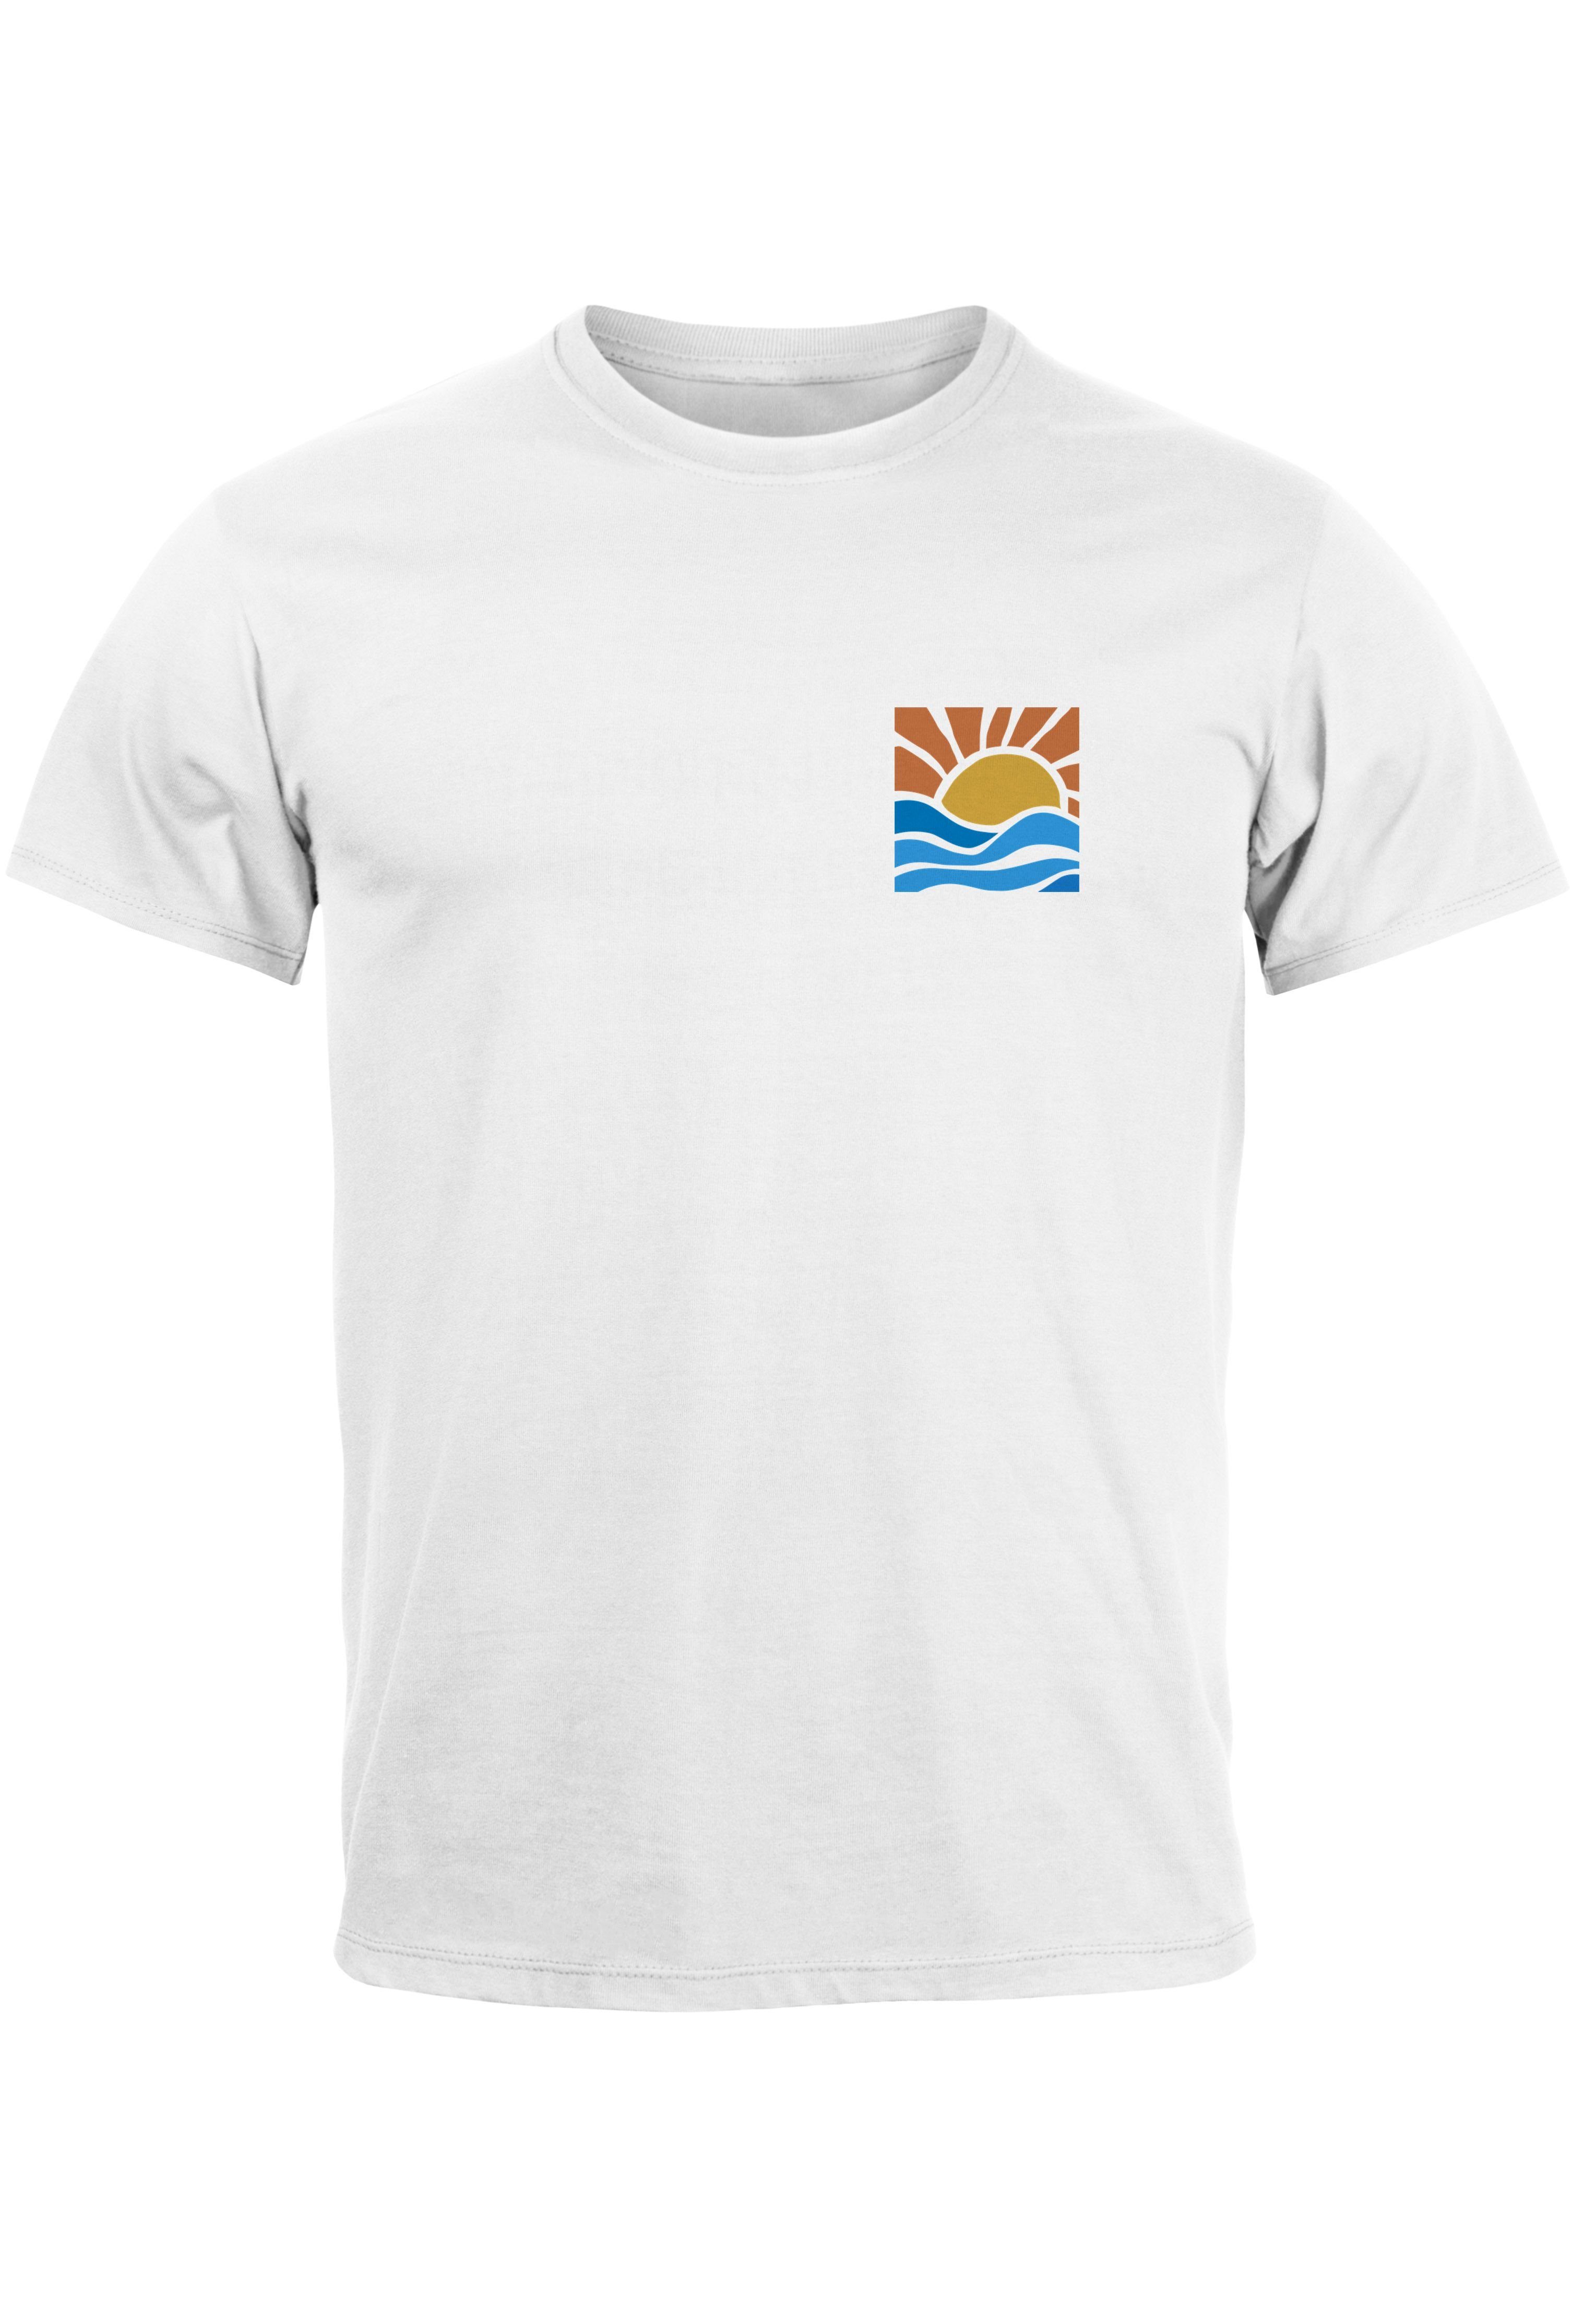 Neverless Print-Shirt Herren T-Shirt Logo Print Sommer Sonne Welle Strand Beach Style Fashio mit Print weiß